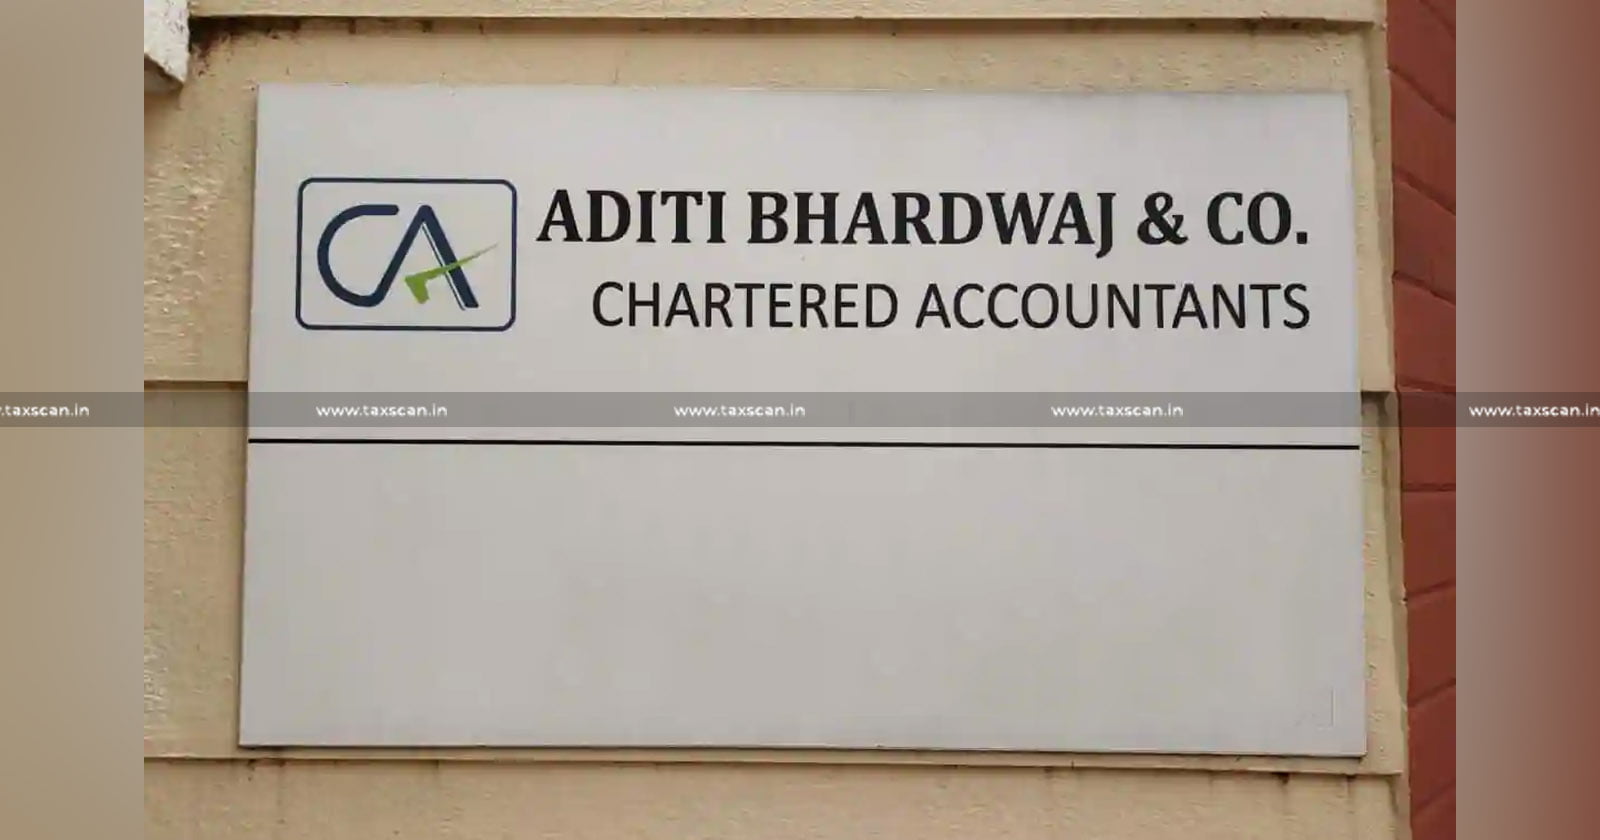 Aditi Bhardwaj & Co. - Chartered Accountants - Articleship Assistants - Articleship -Taxscan